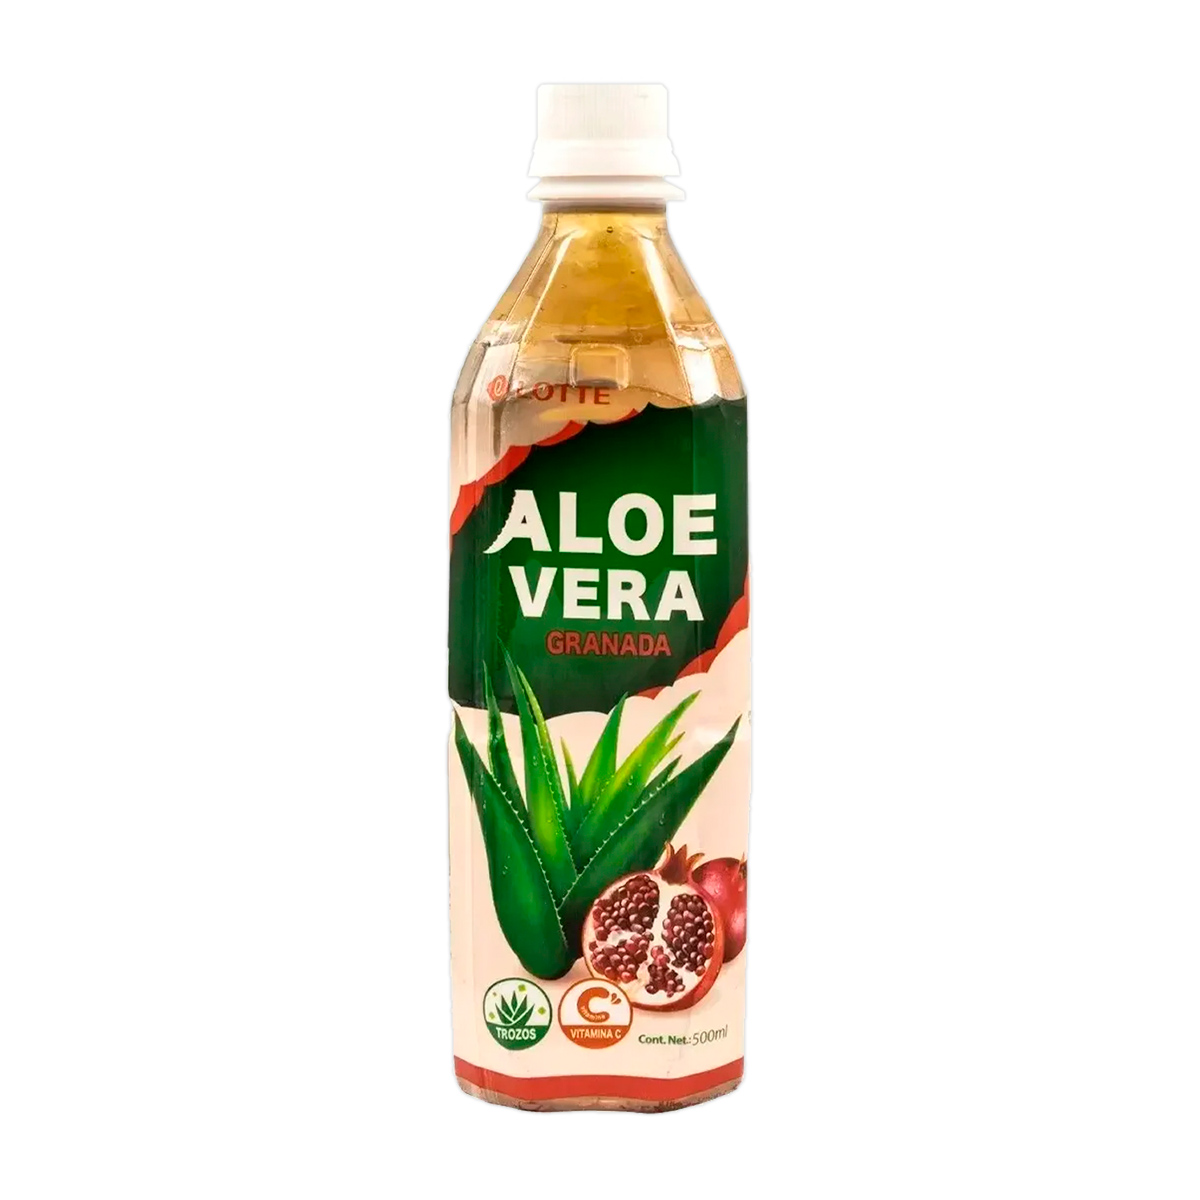 Aloe Vera Granada